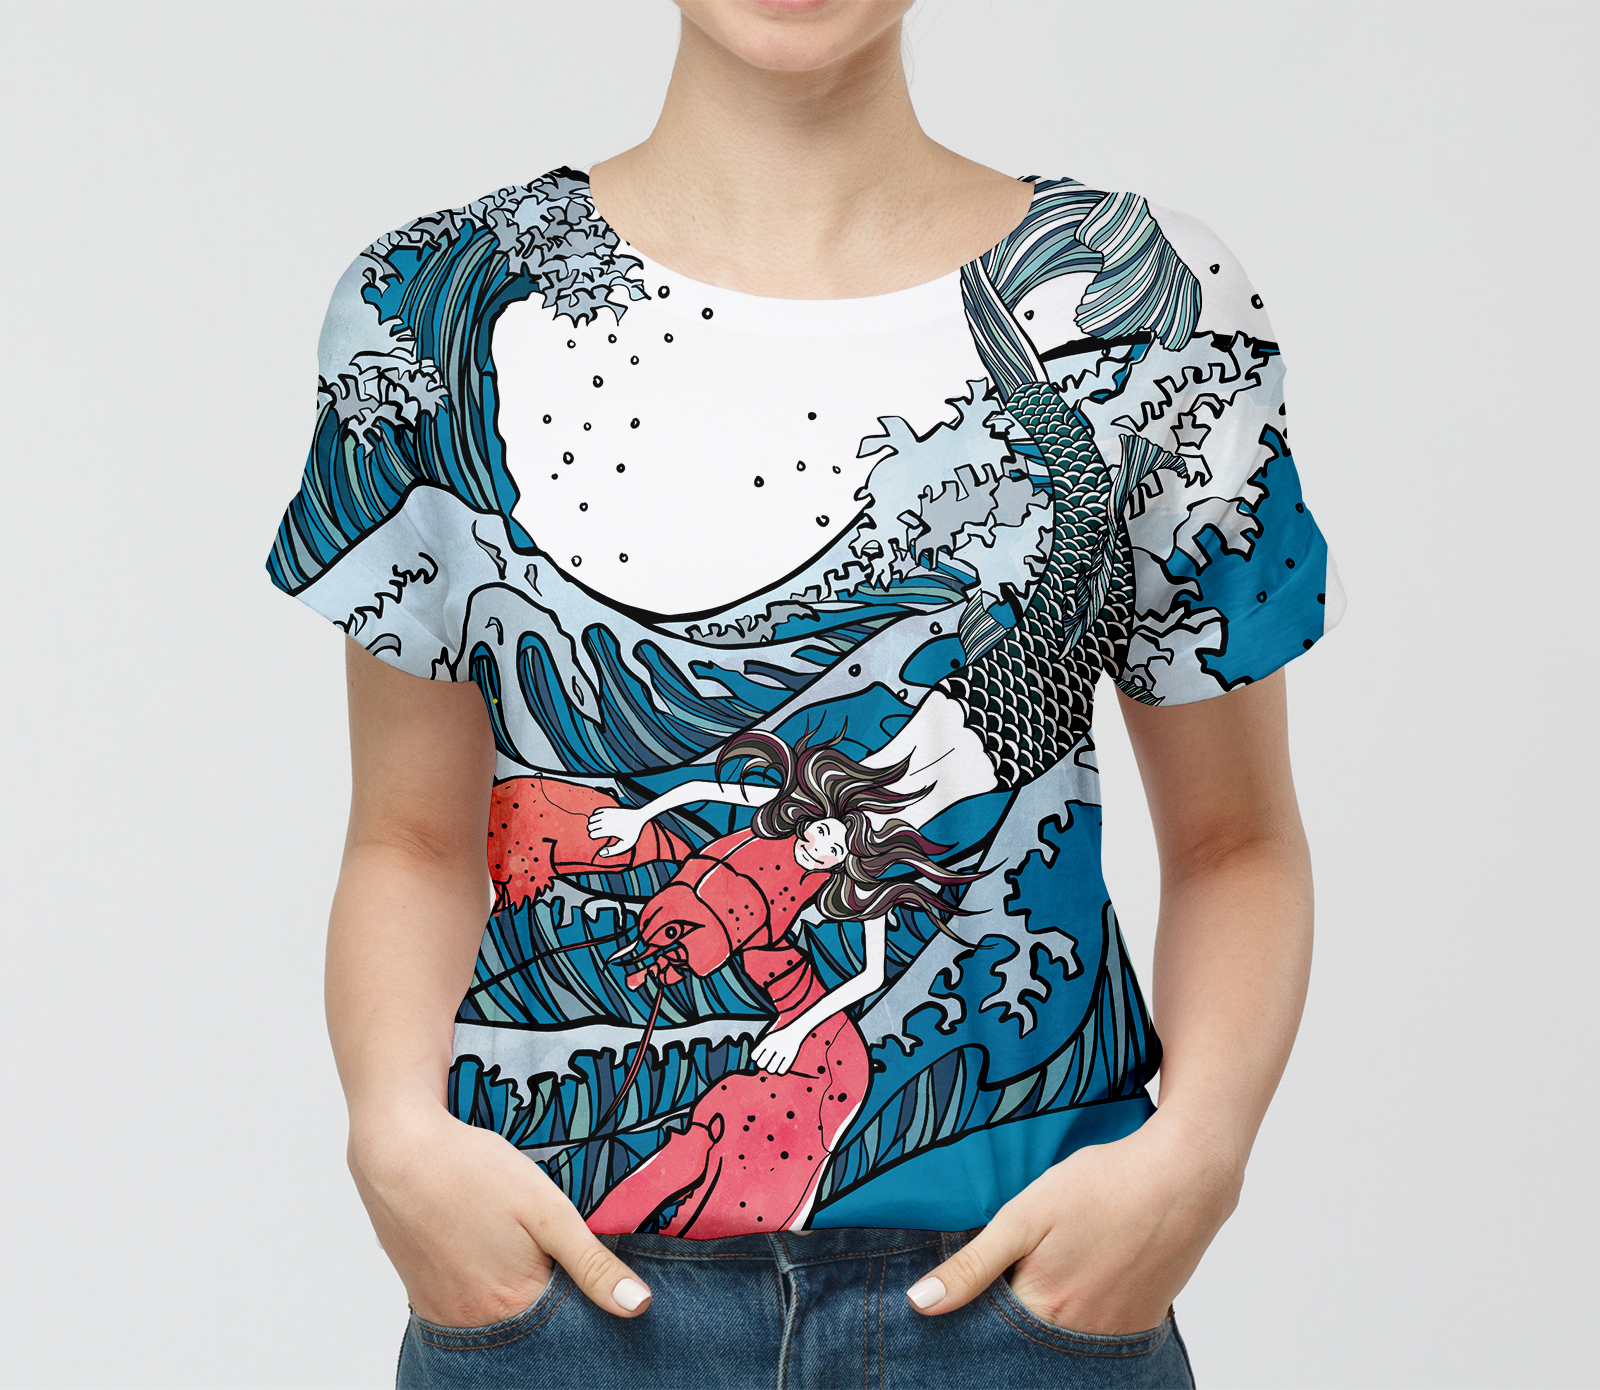 The Coney Island Mermaid Parade Poster Illustration: T-shirt